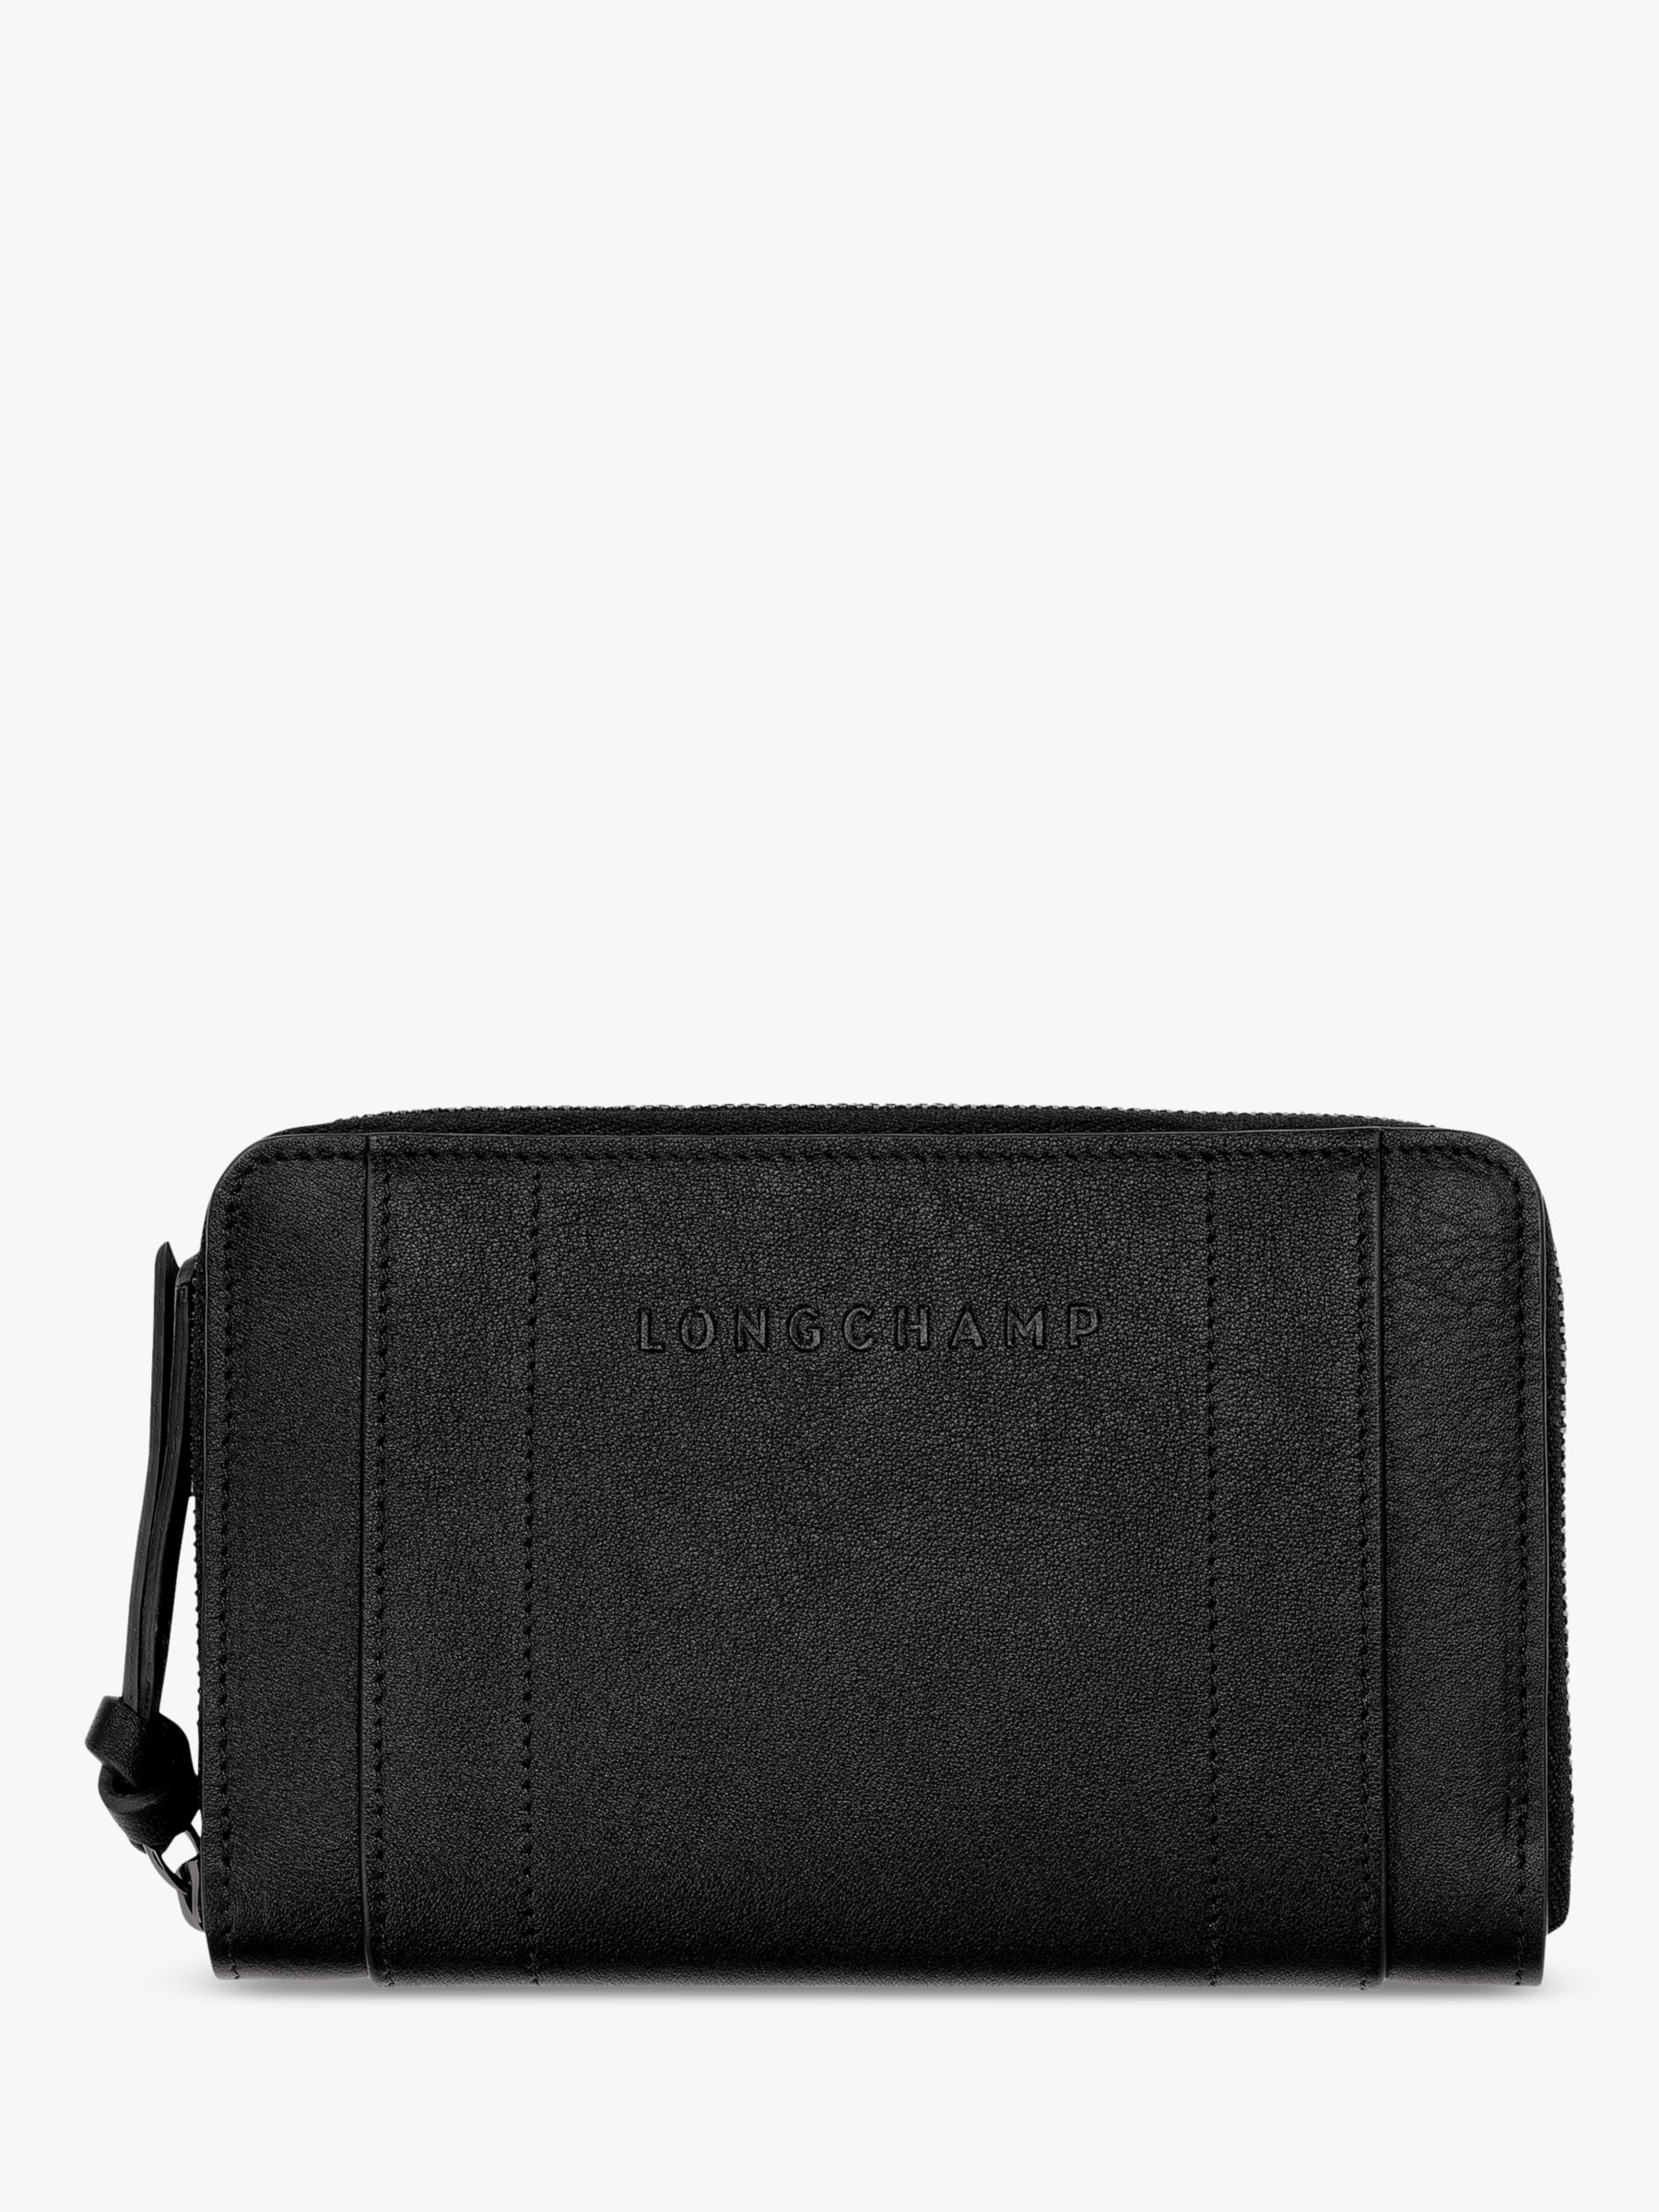 Buy Longchamp 3D Leather Wallet Online at johnlewis.com